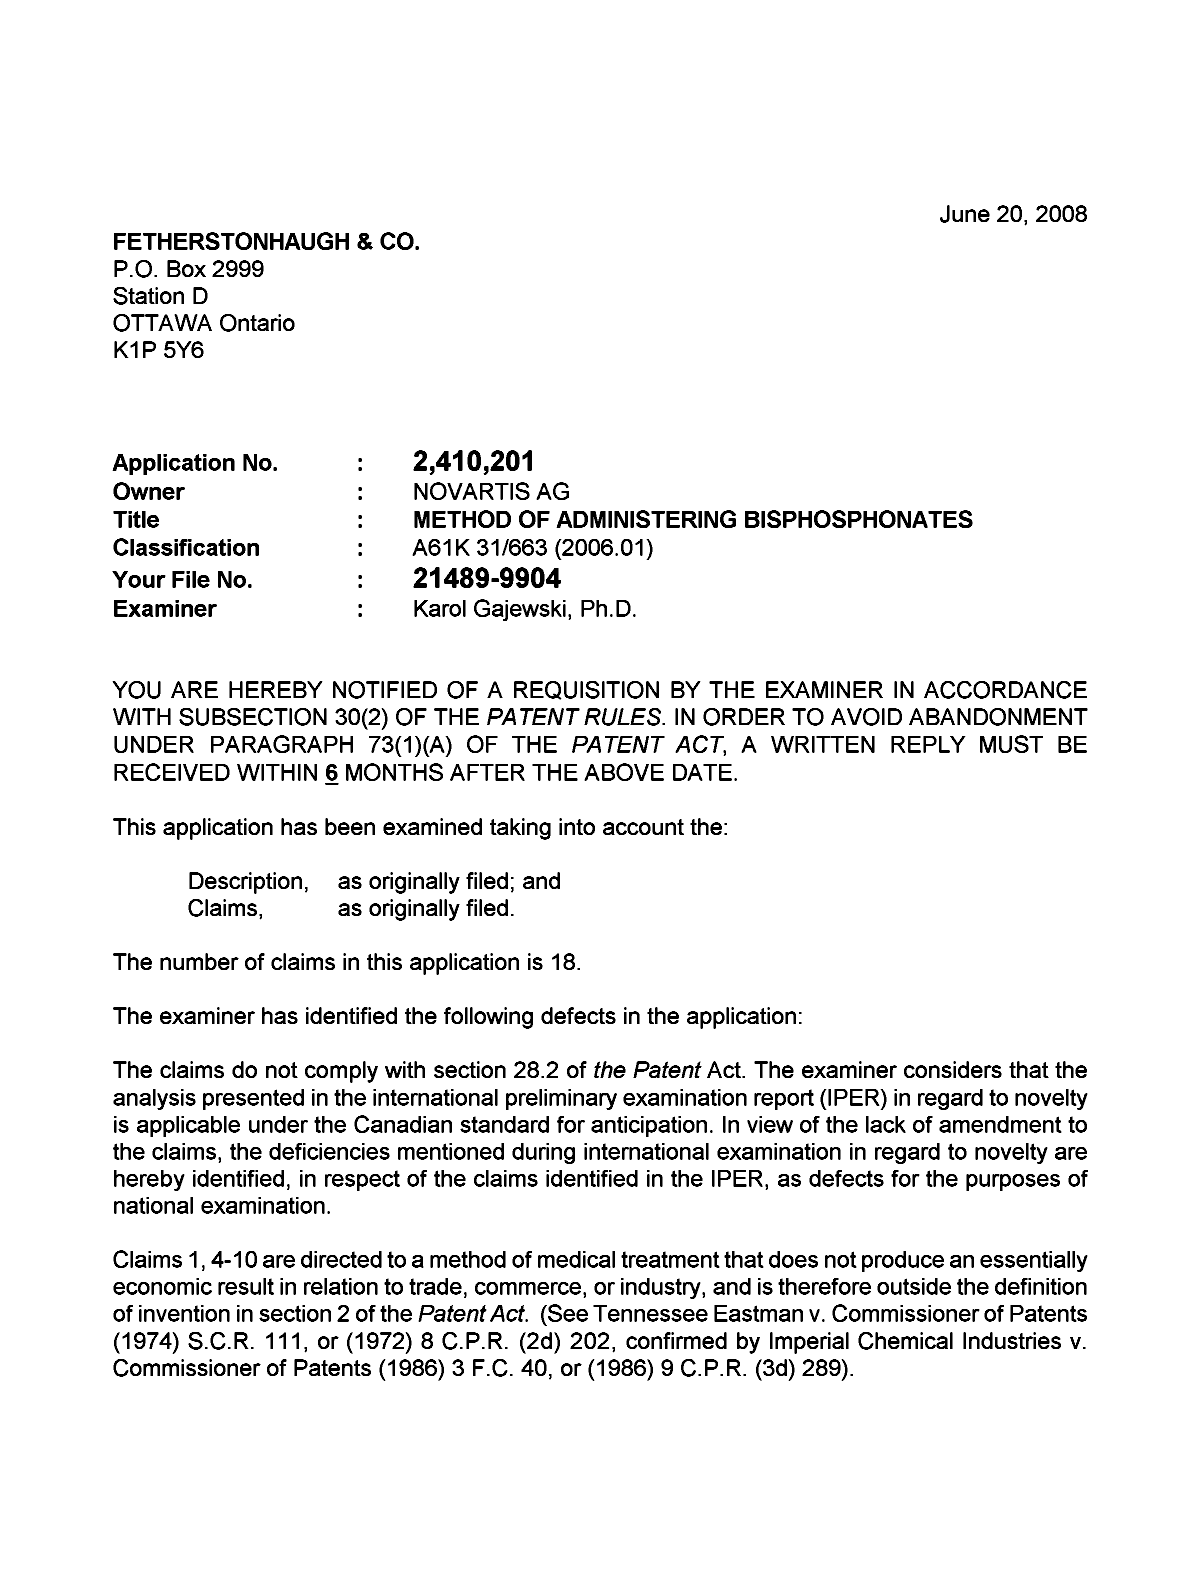 Canadian Patent Document 2410201. Prosecution-Amendment 20071220. Image 1 of 2